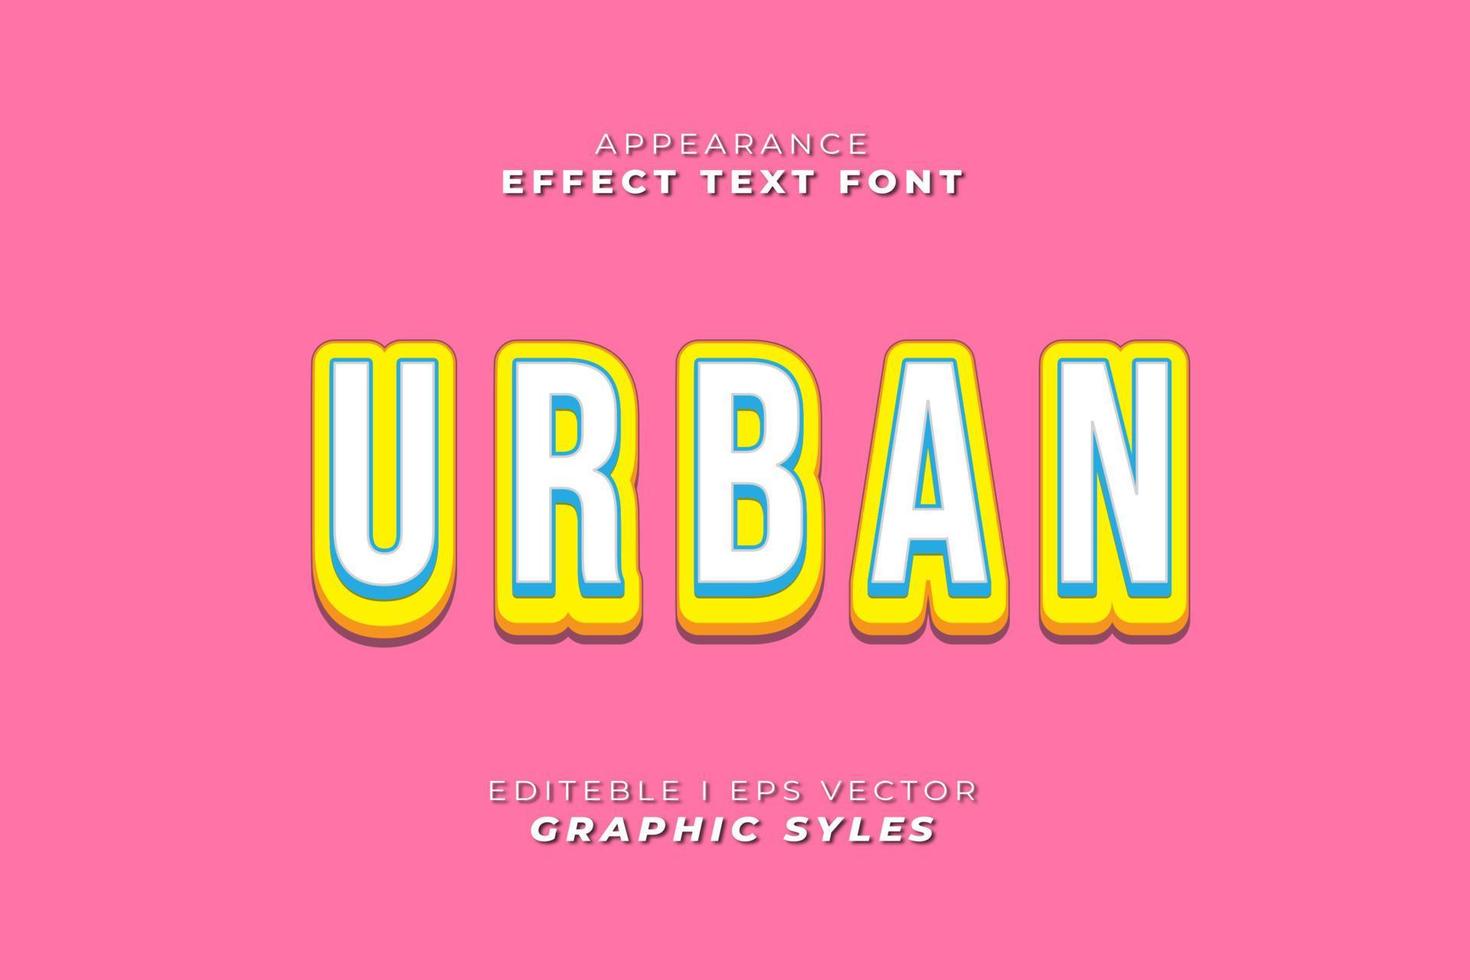 Editable text effect sticker font. vector